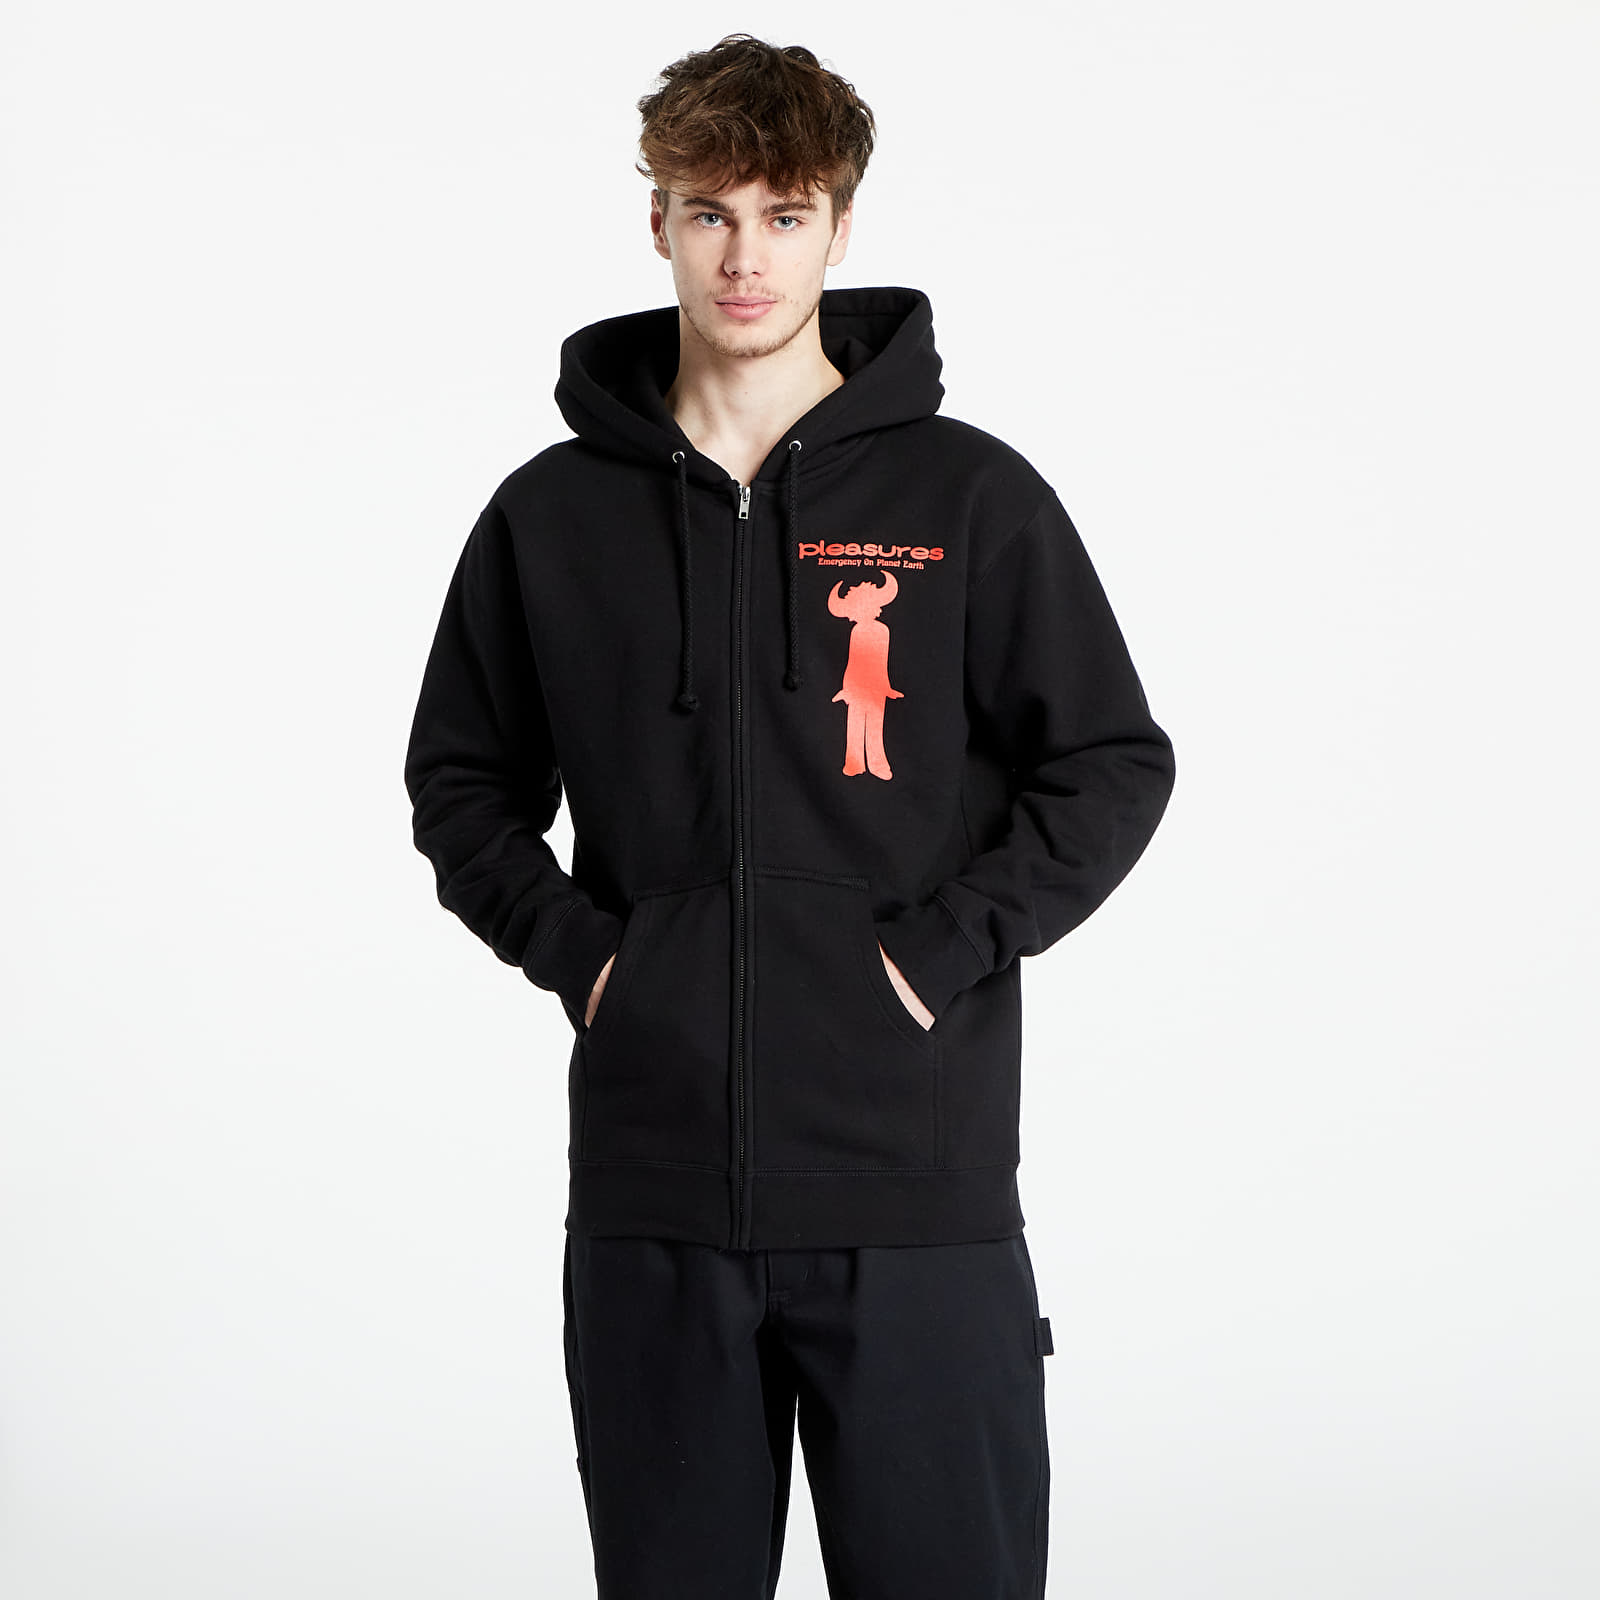 PLEASURES - x jamiroquai high times zip hooded sweatshirt black